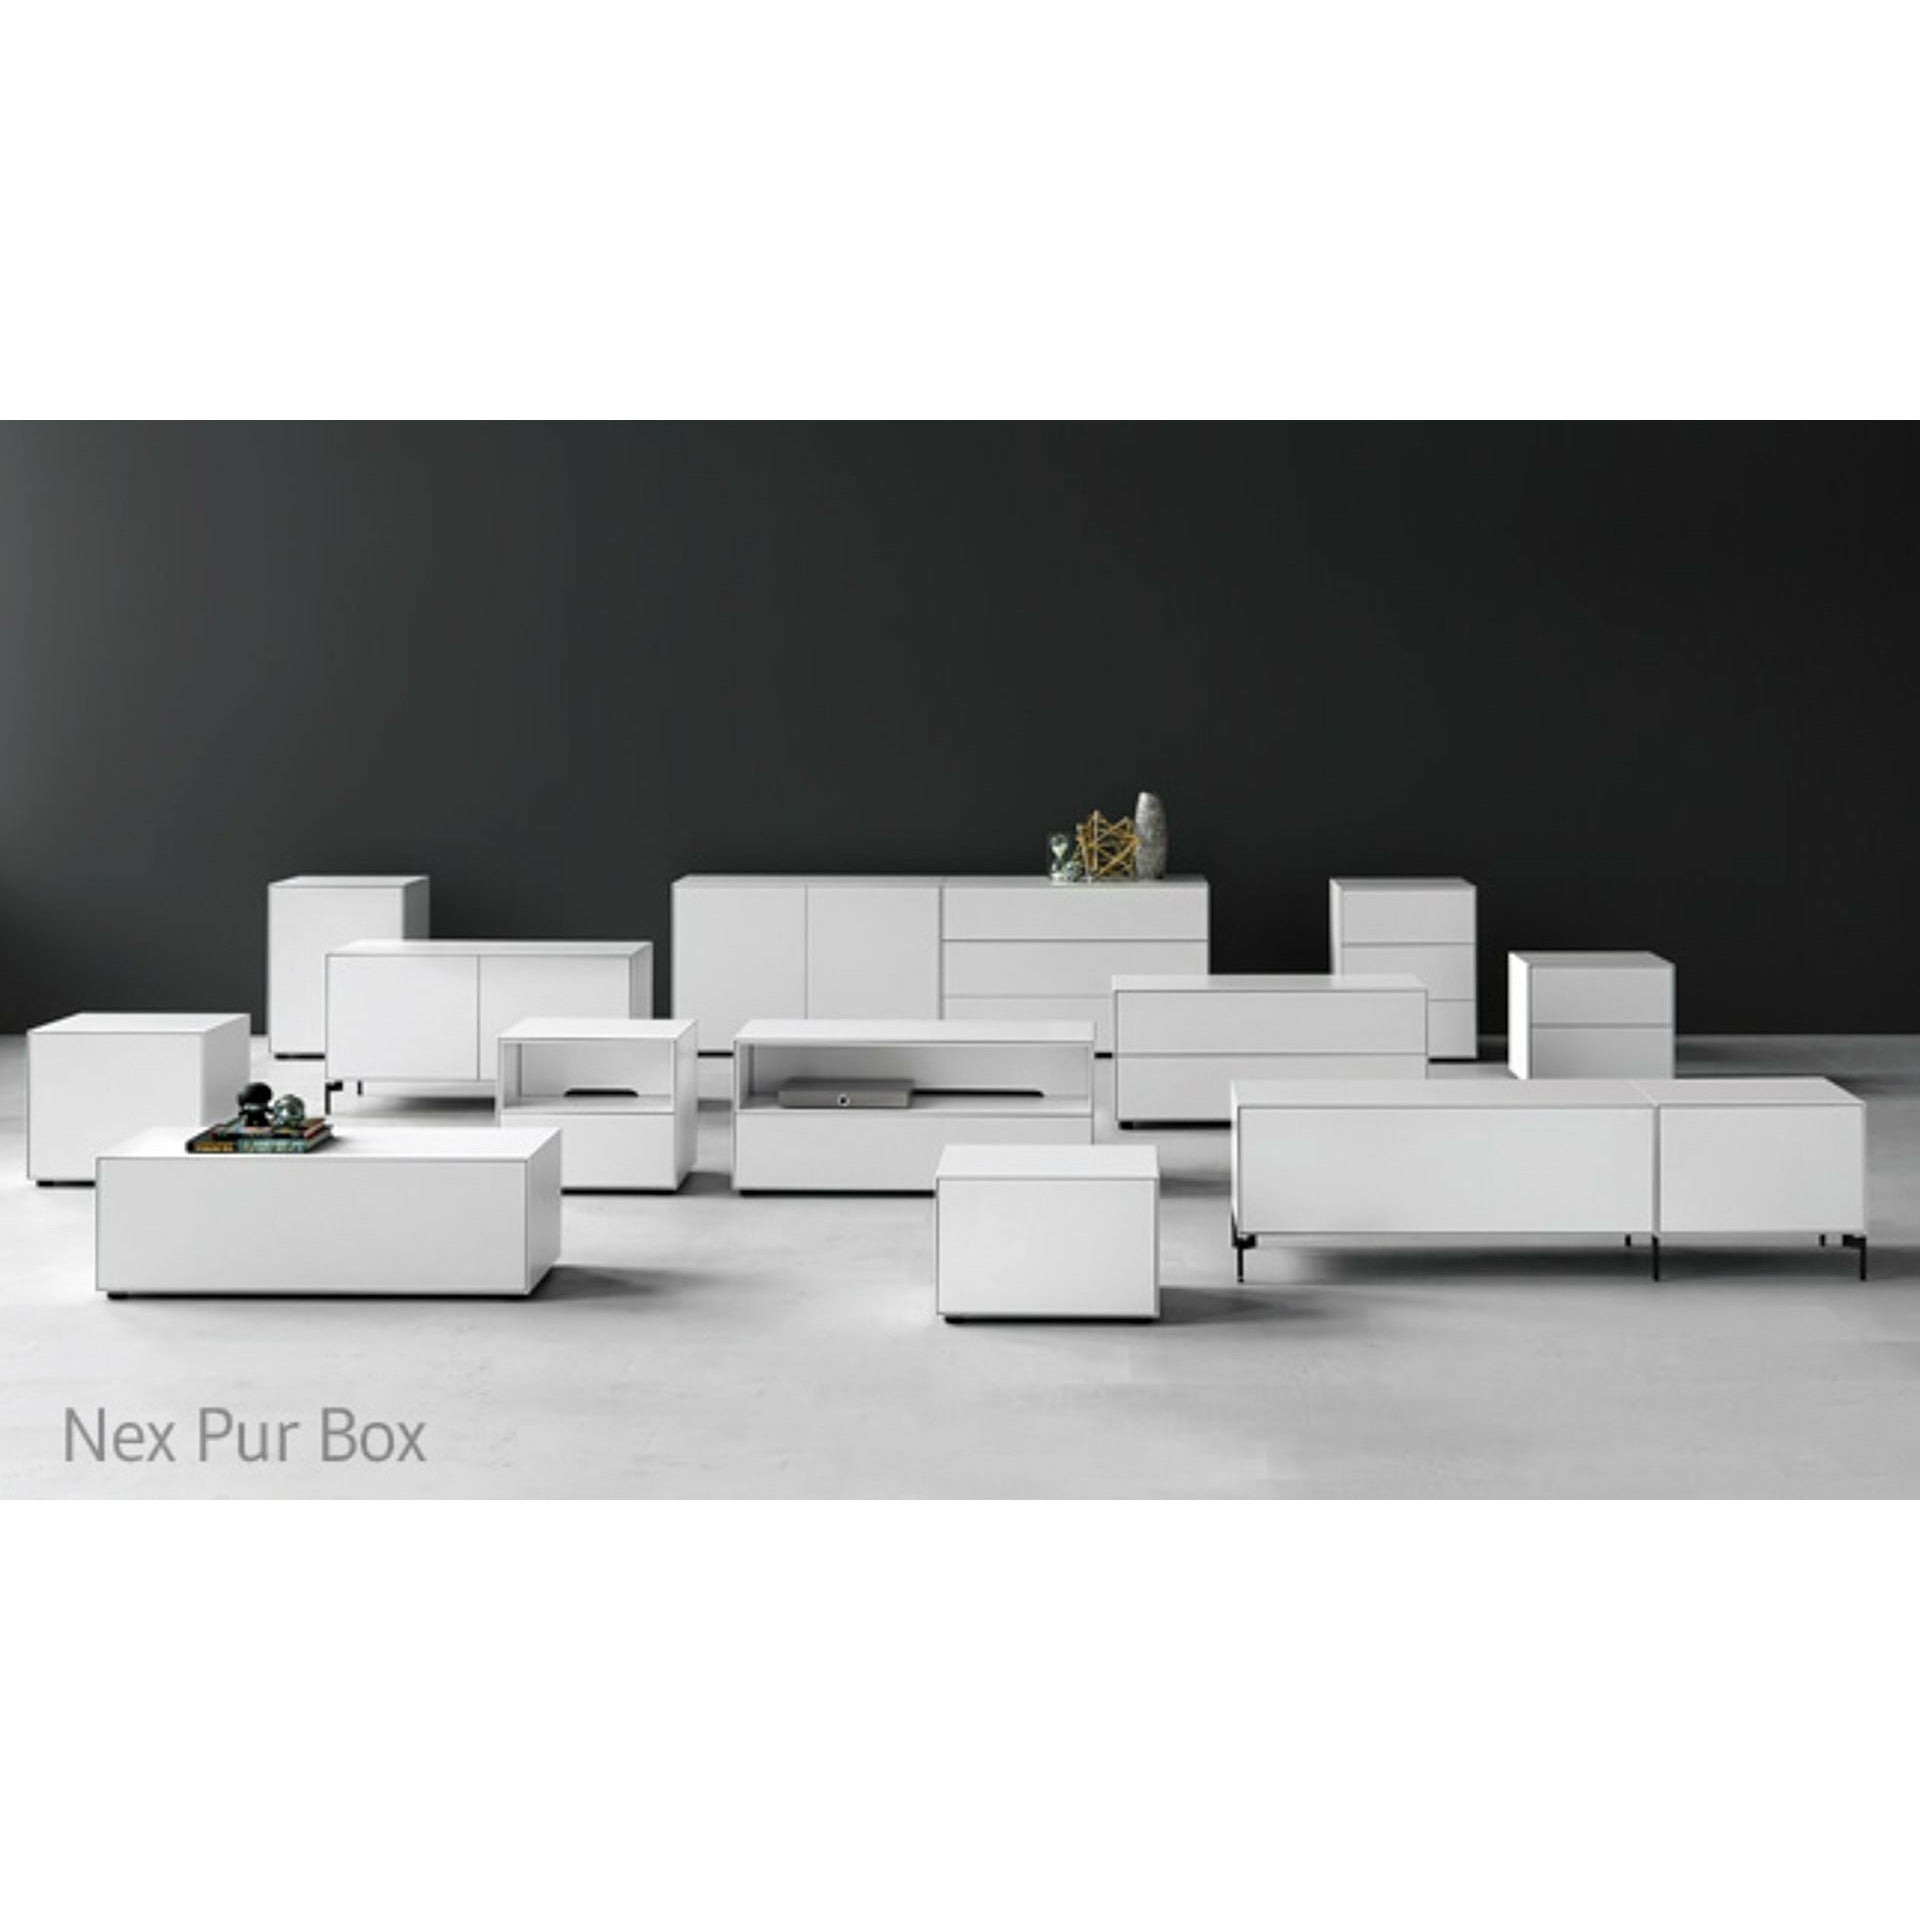 Piure Nex Pur Box HX W 50x120 cm, 2 laden